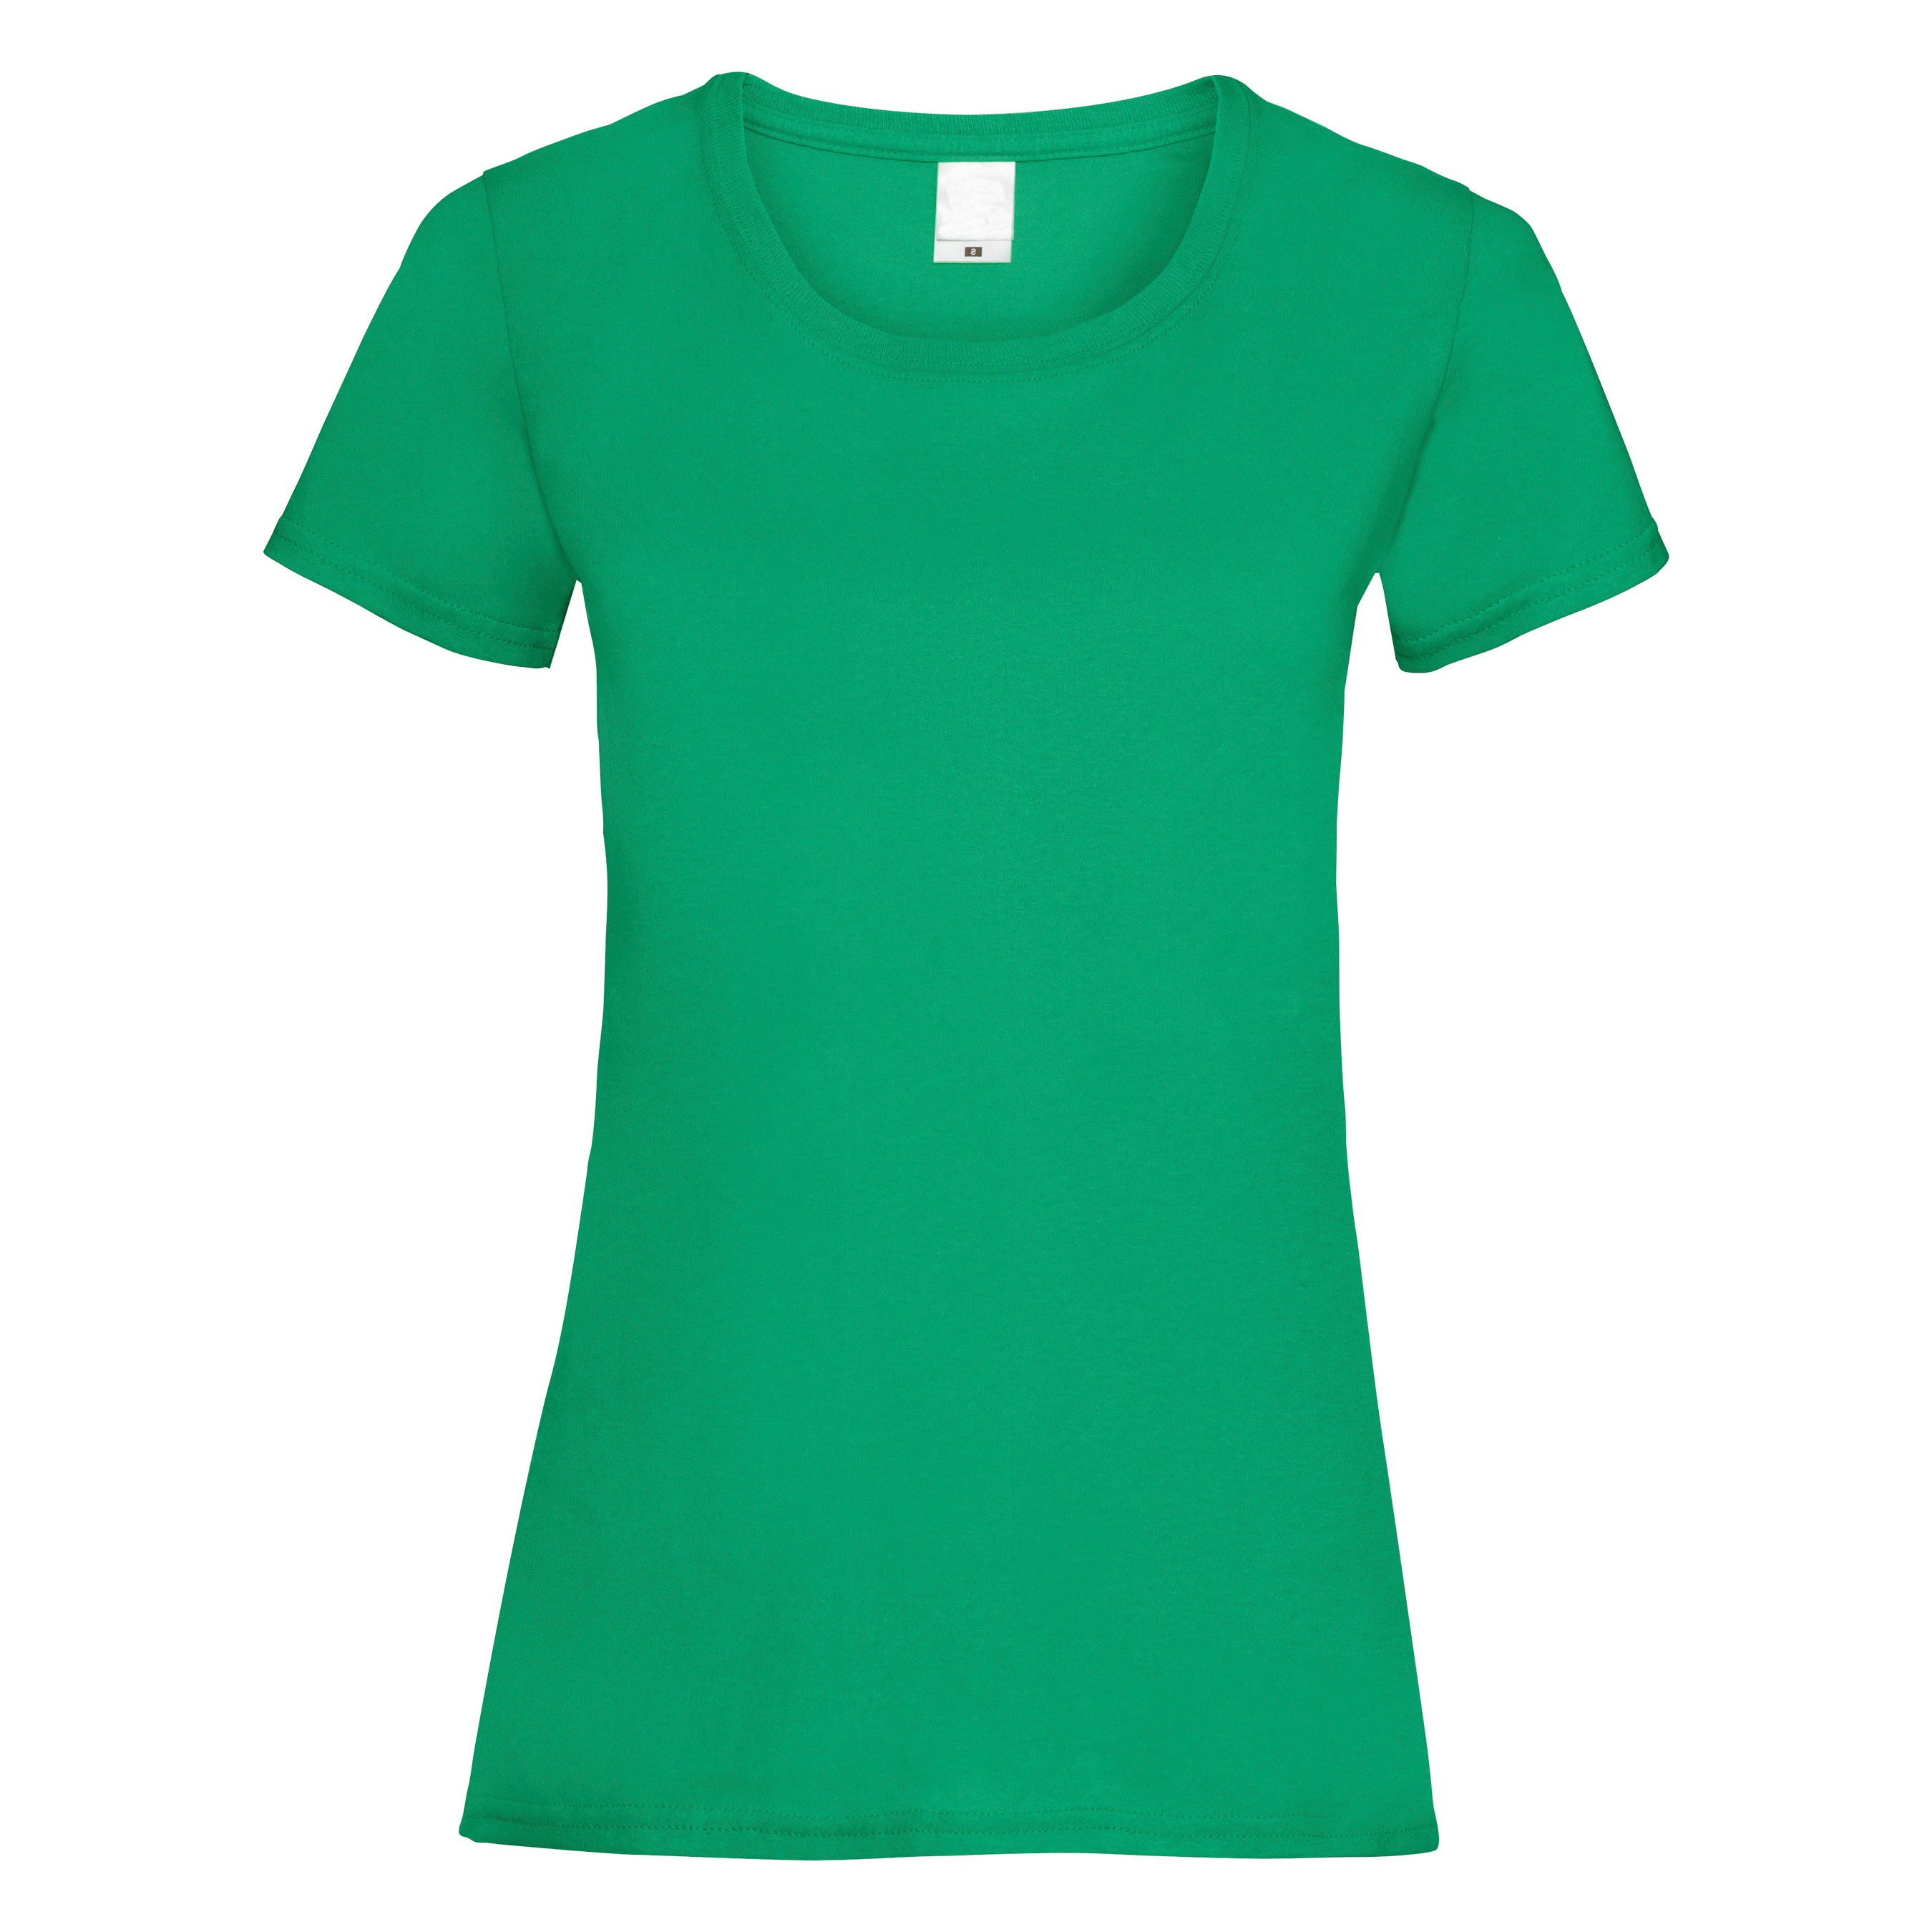 Camiseta Casual De Manga Corta Universal Textiles - verde - 